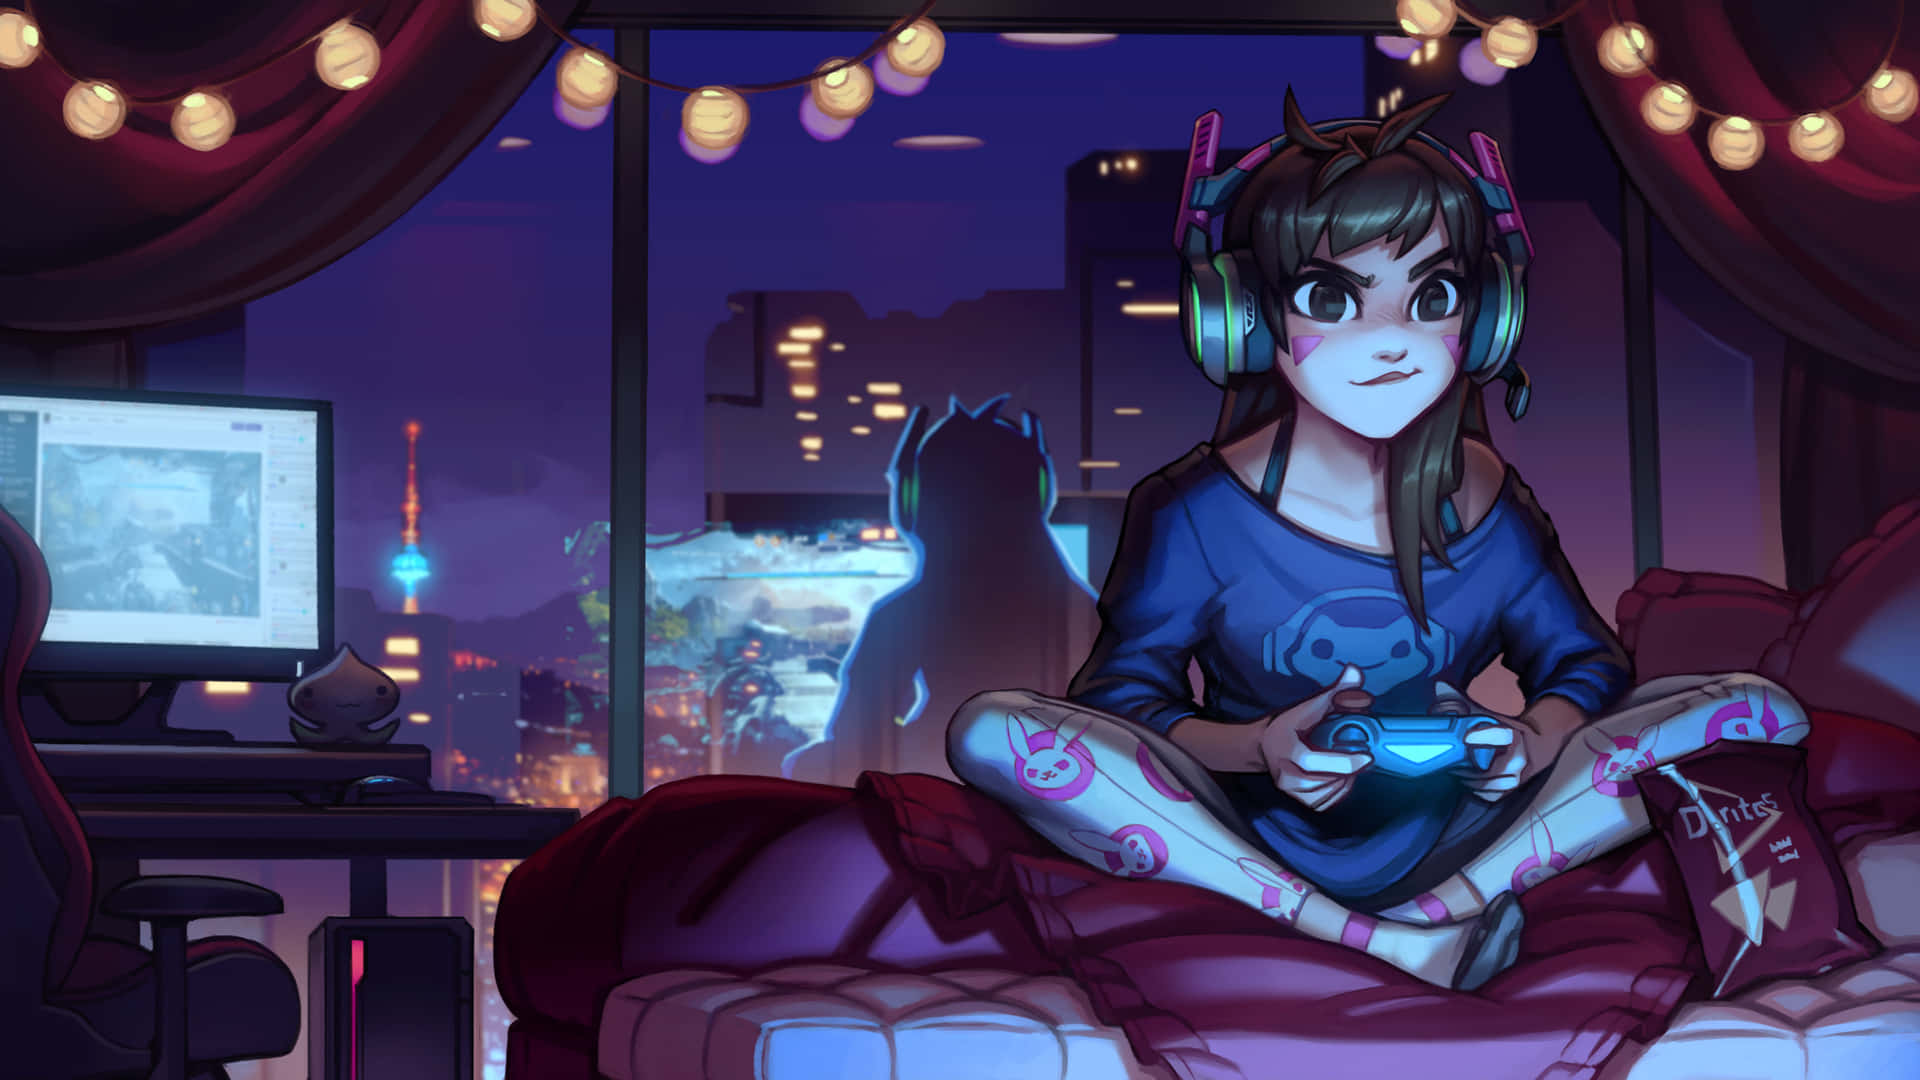 Cute Gamer Girl DVa From Overwatch Wallpaper